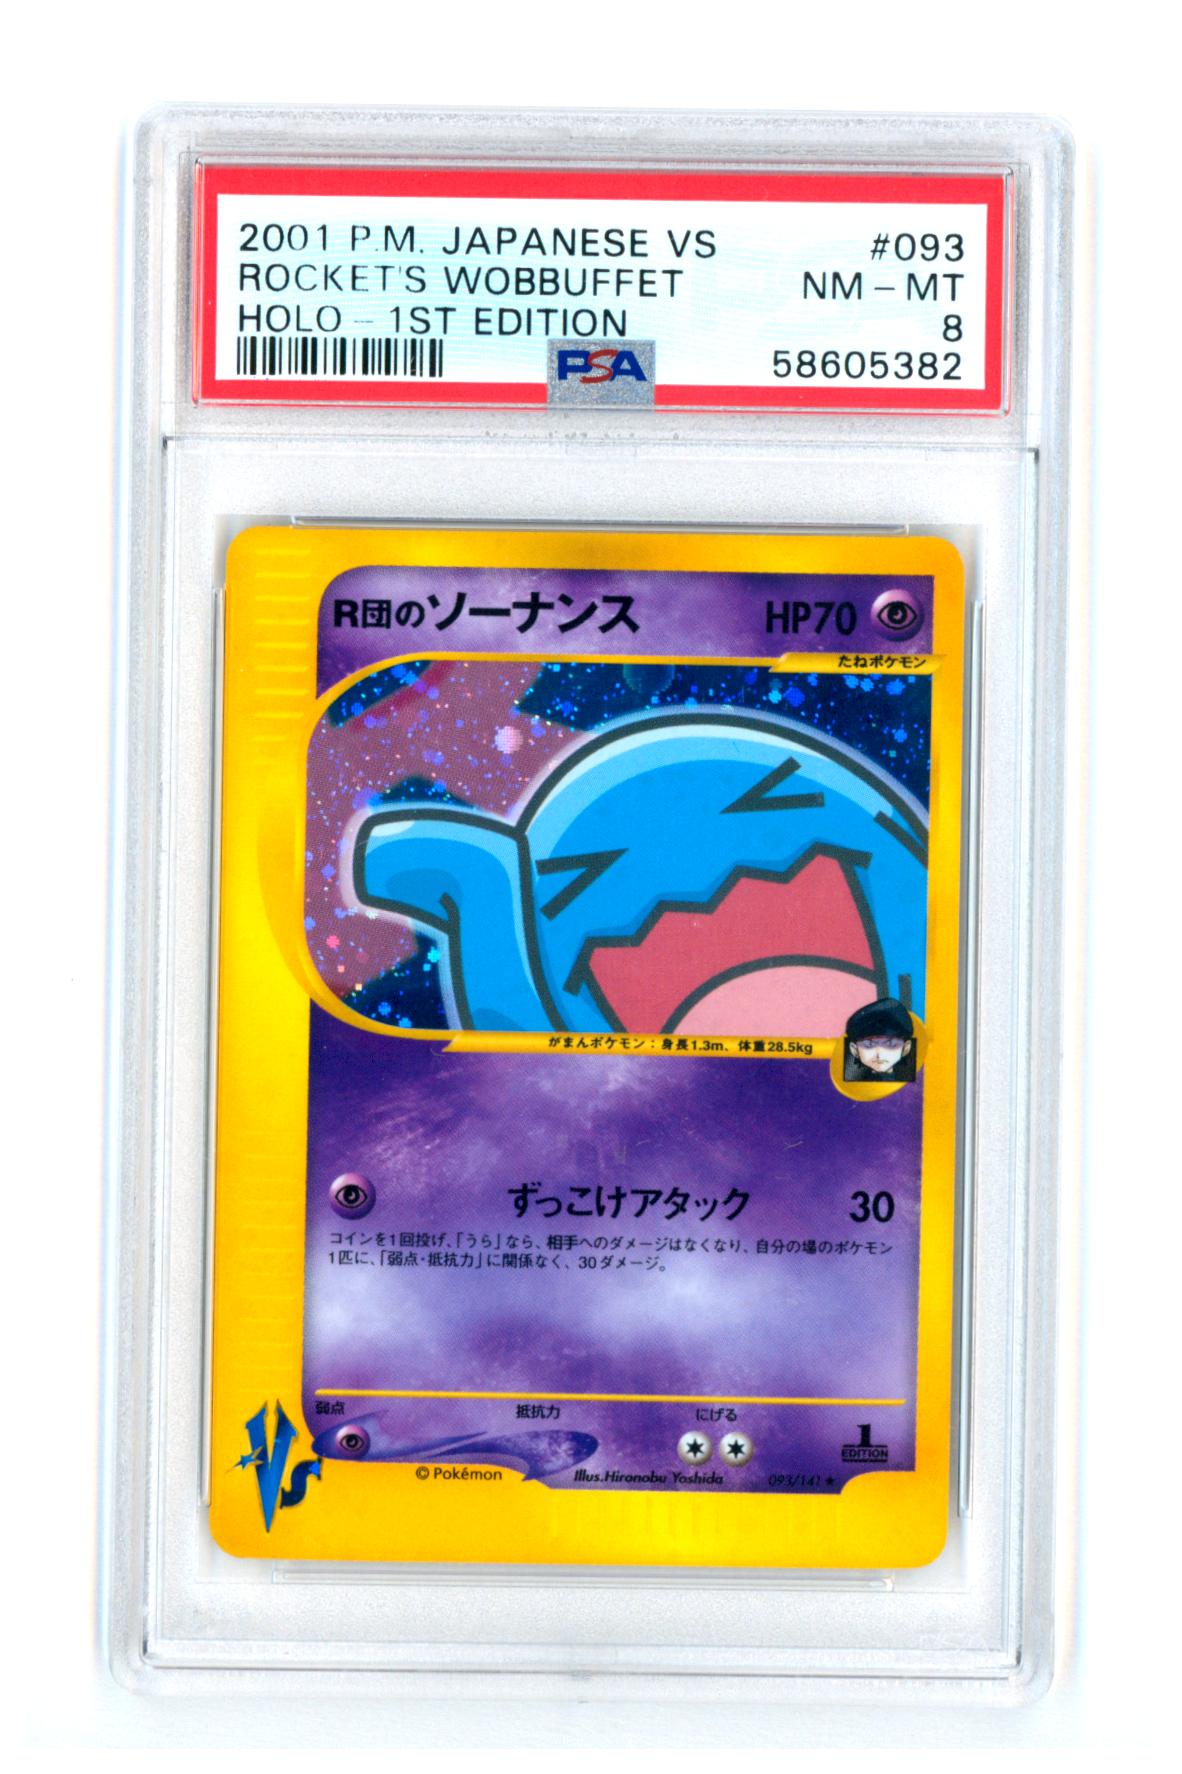 Rocket's Wobbuffet - Japanese VS - 1st Edition - Holo - PSA 8 NM-MT​ - Pokémon